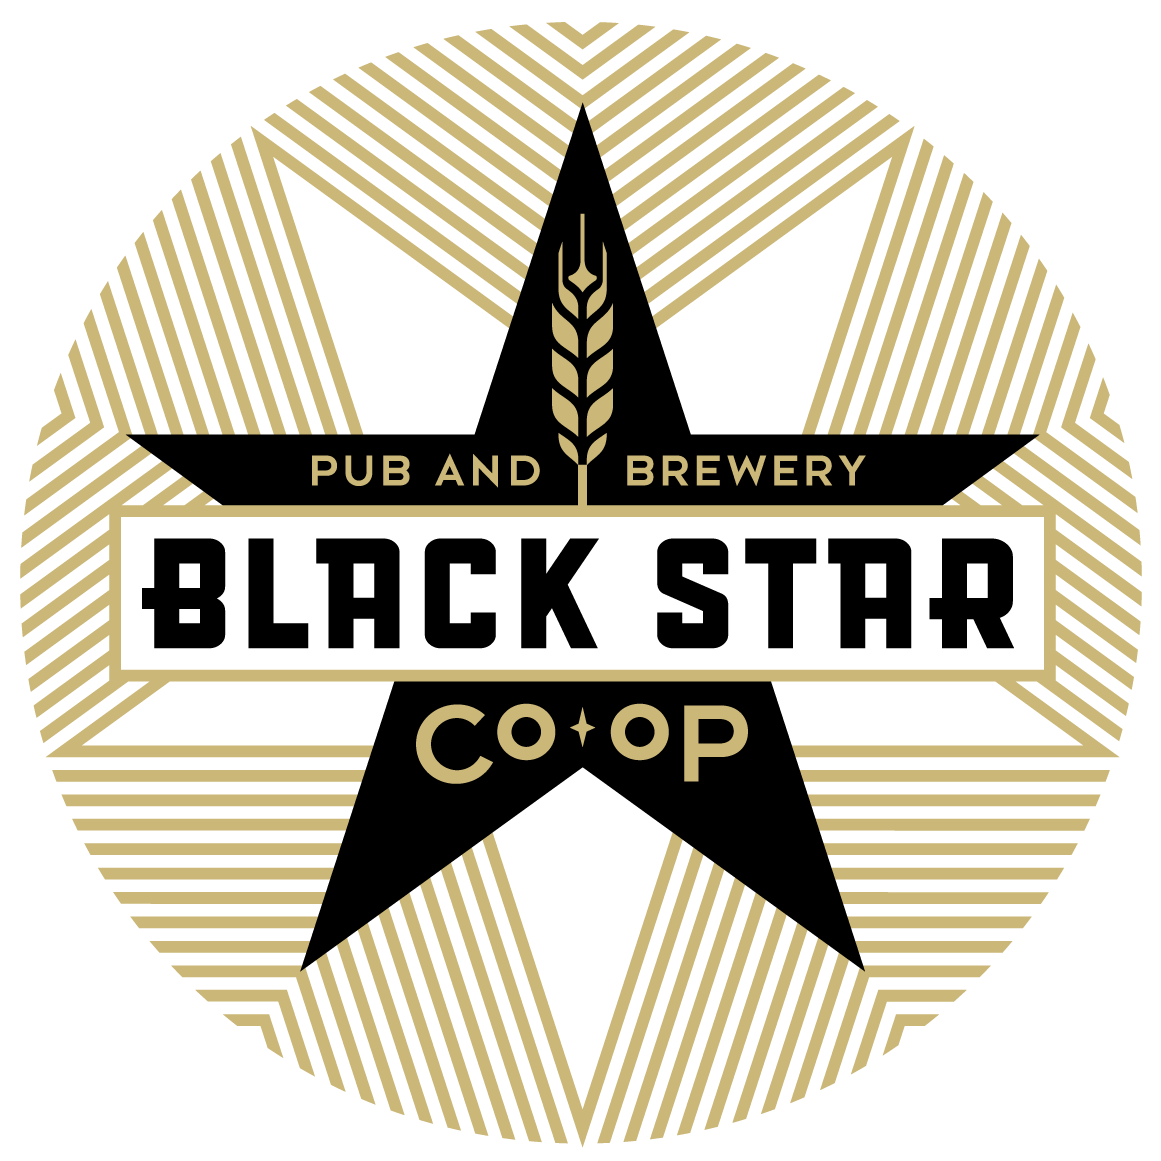 Black Star in Circle Company Logo - Black Star Co-op (@blackstarcoop) | Twitter